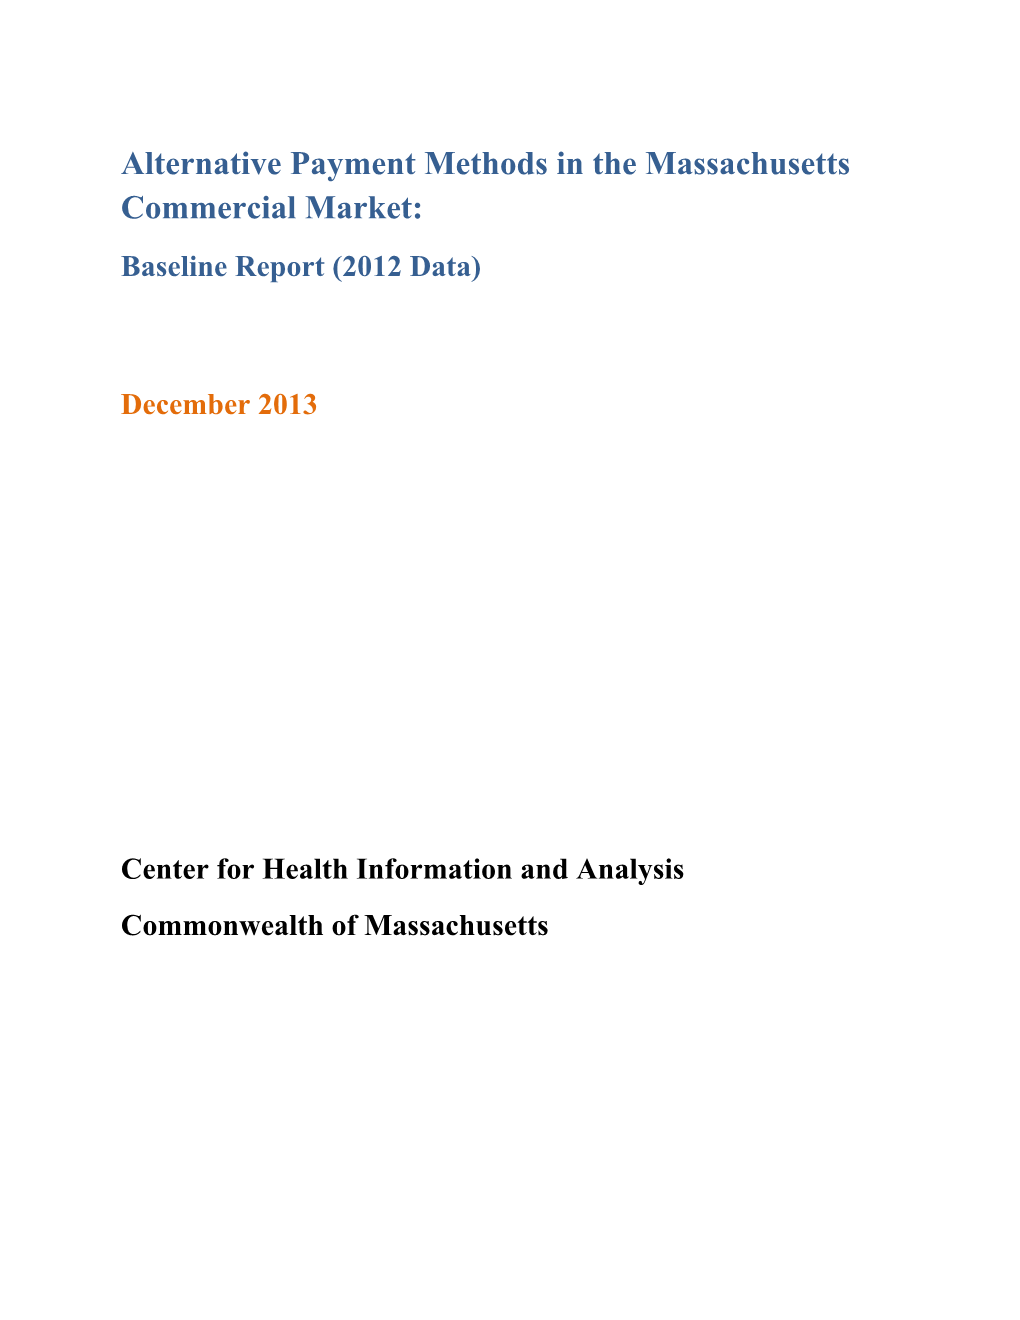 Alternative Payment Methods in the Massachusetts Commercial Market